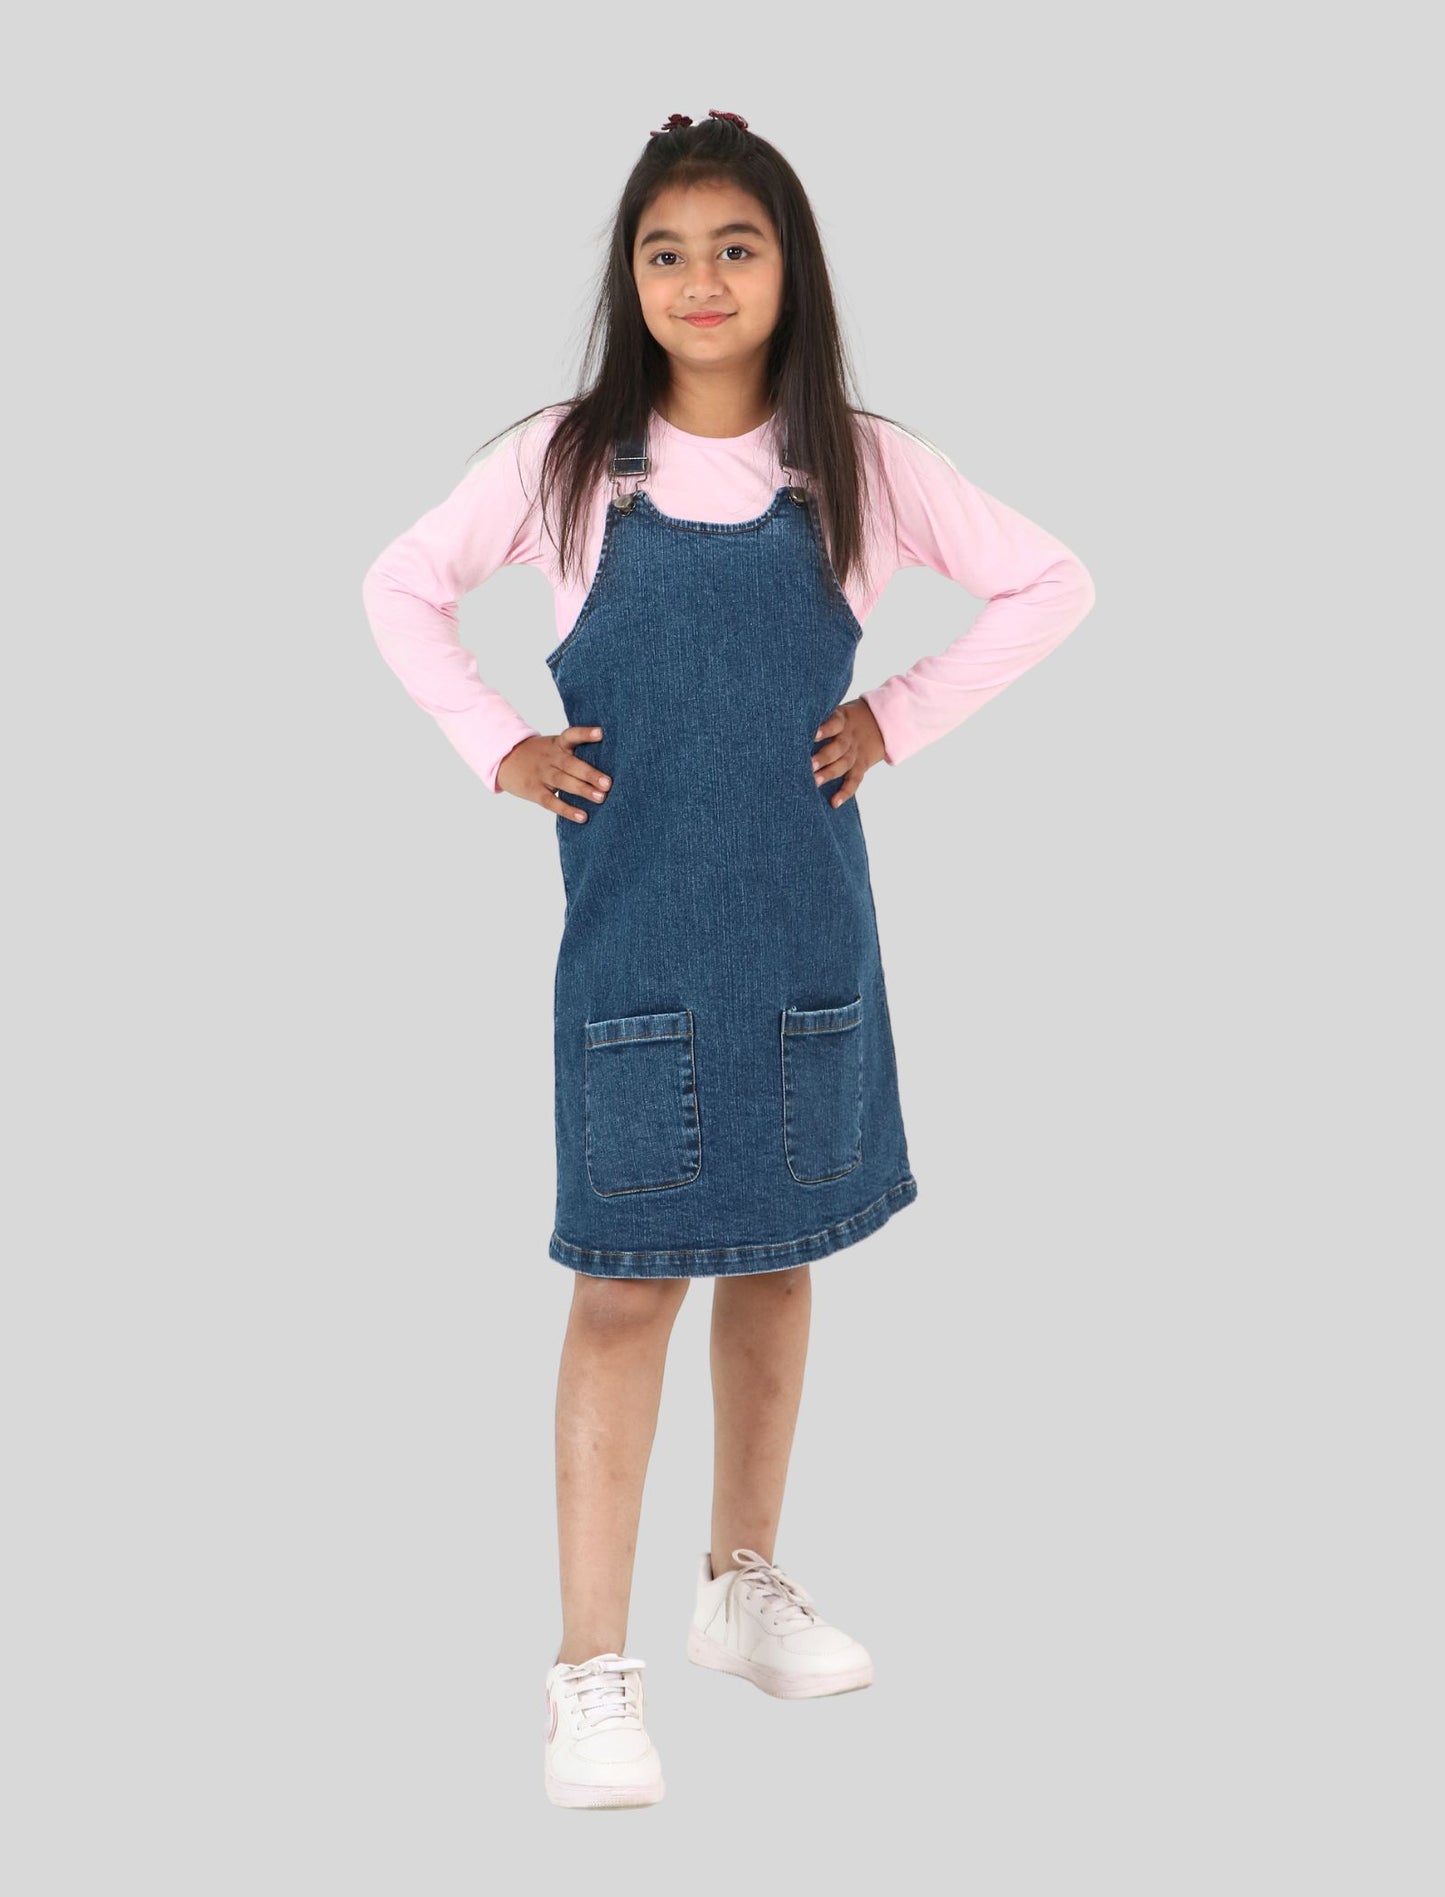 Girls Kids Denim Pinafore Dress (Blue)